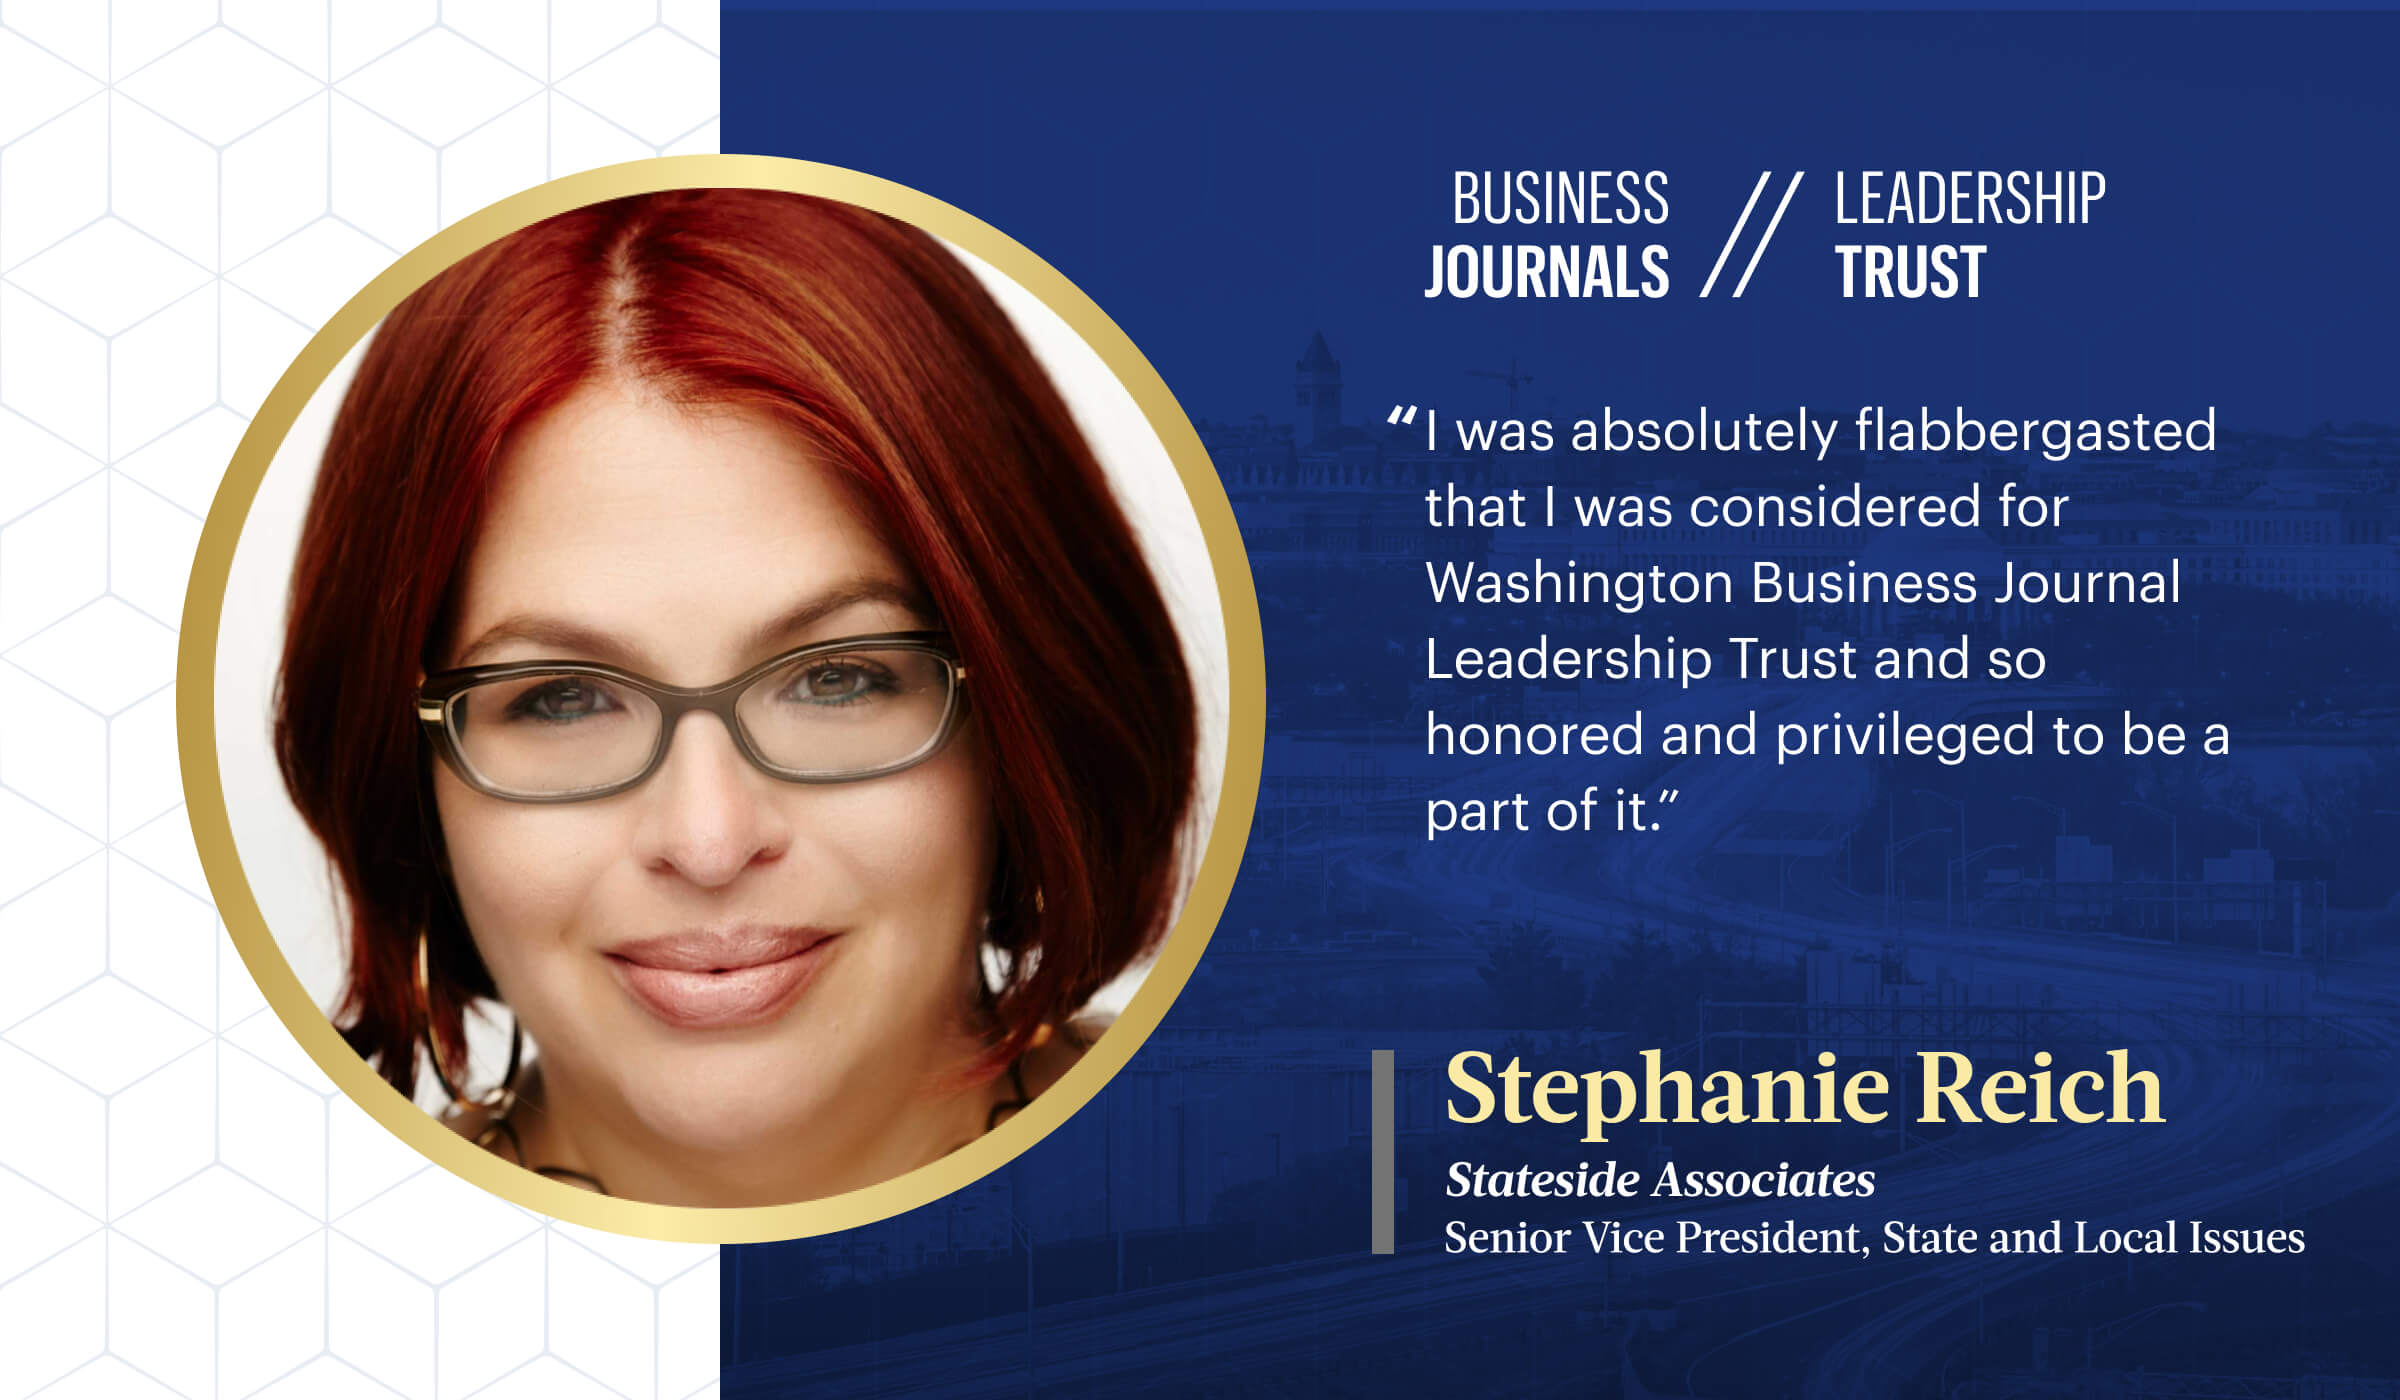 Business Journals Leadership Trust member Stephanie Reich